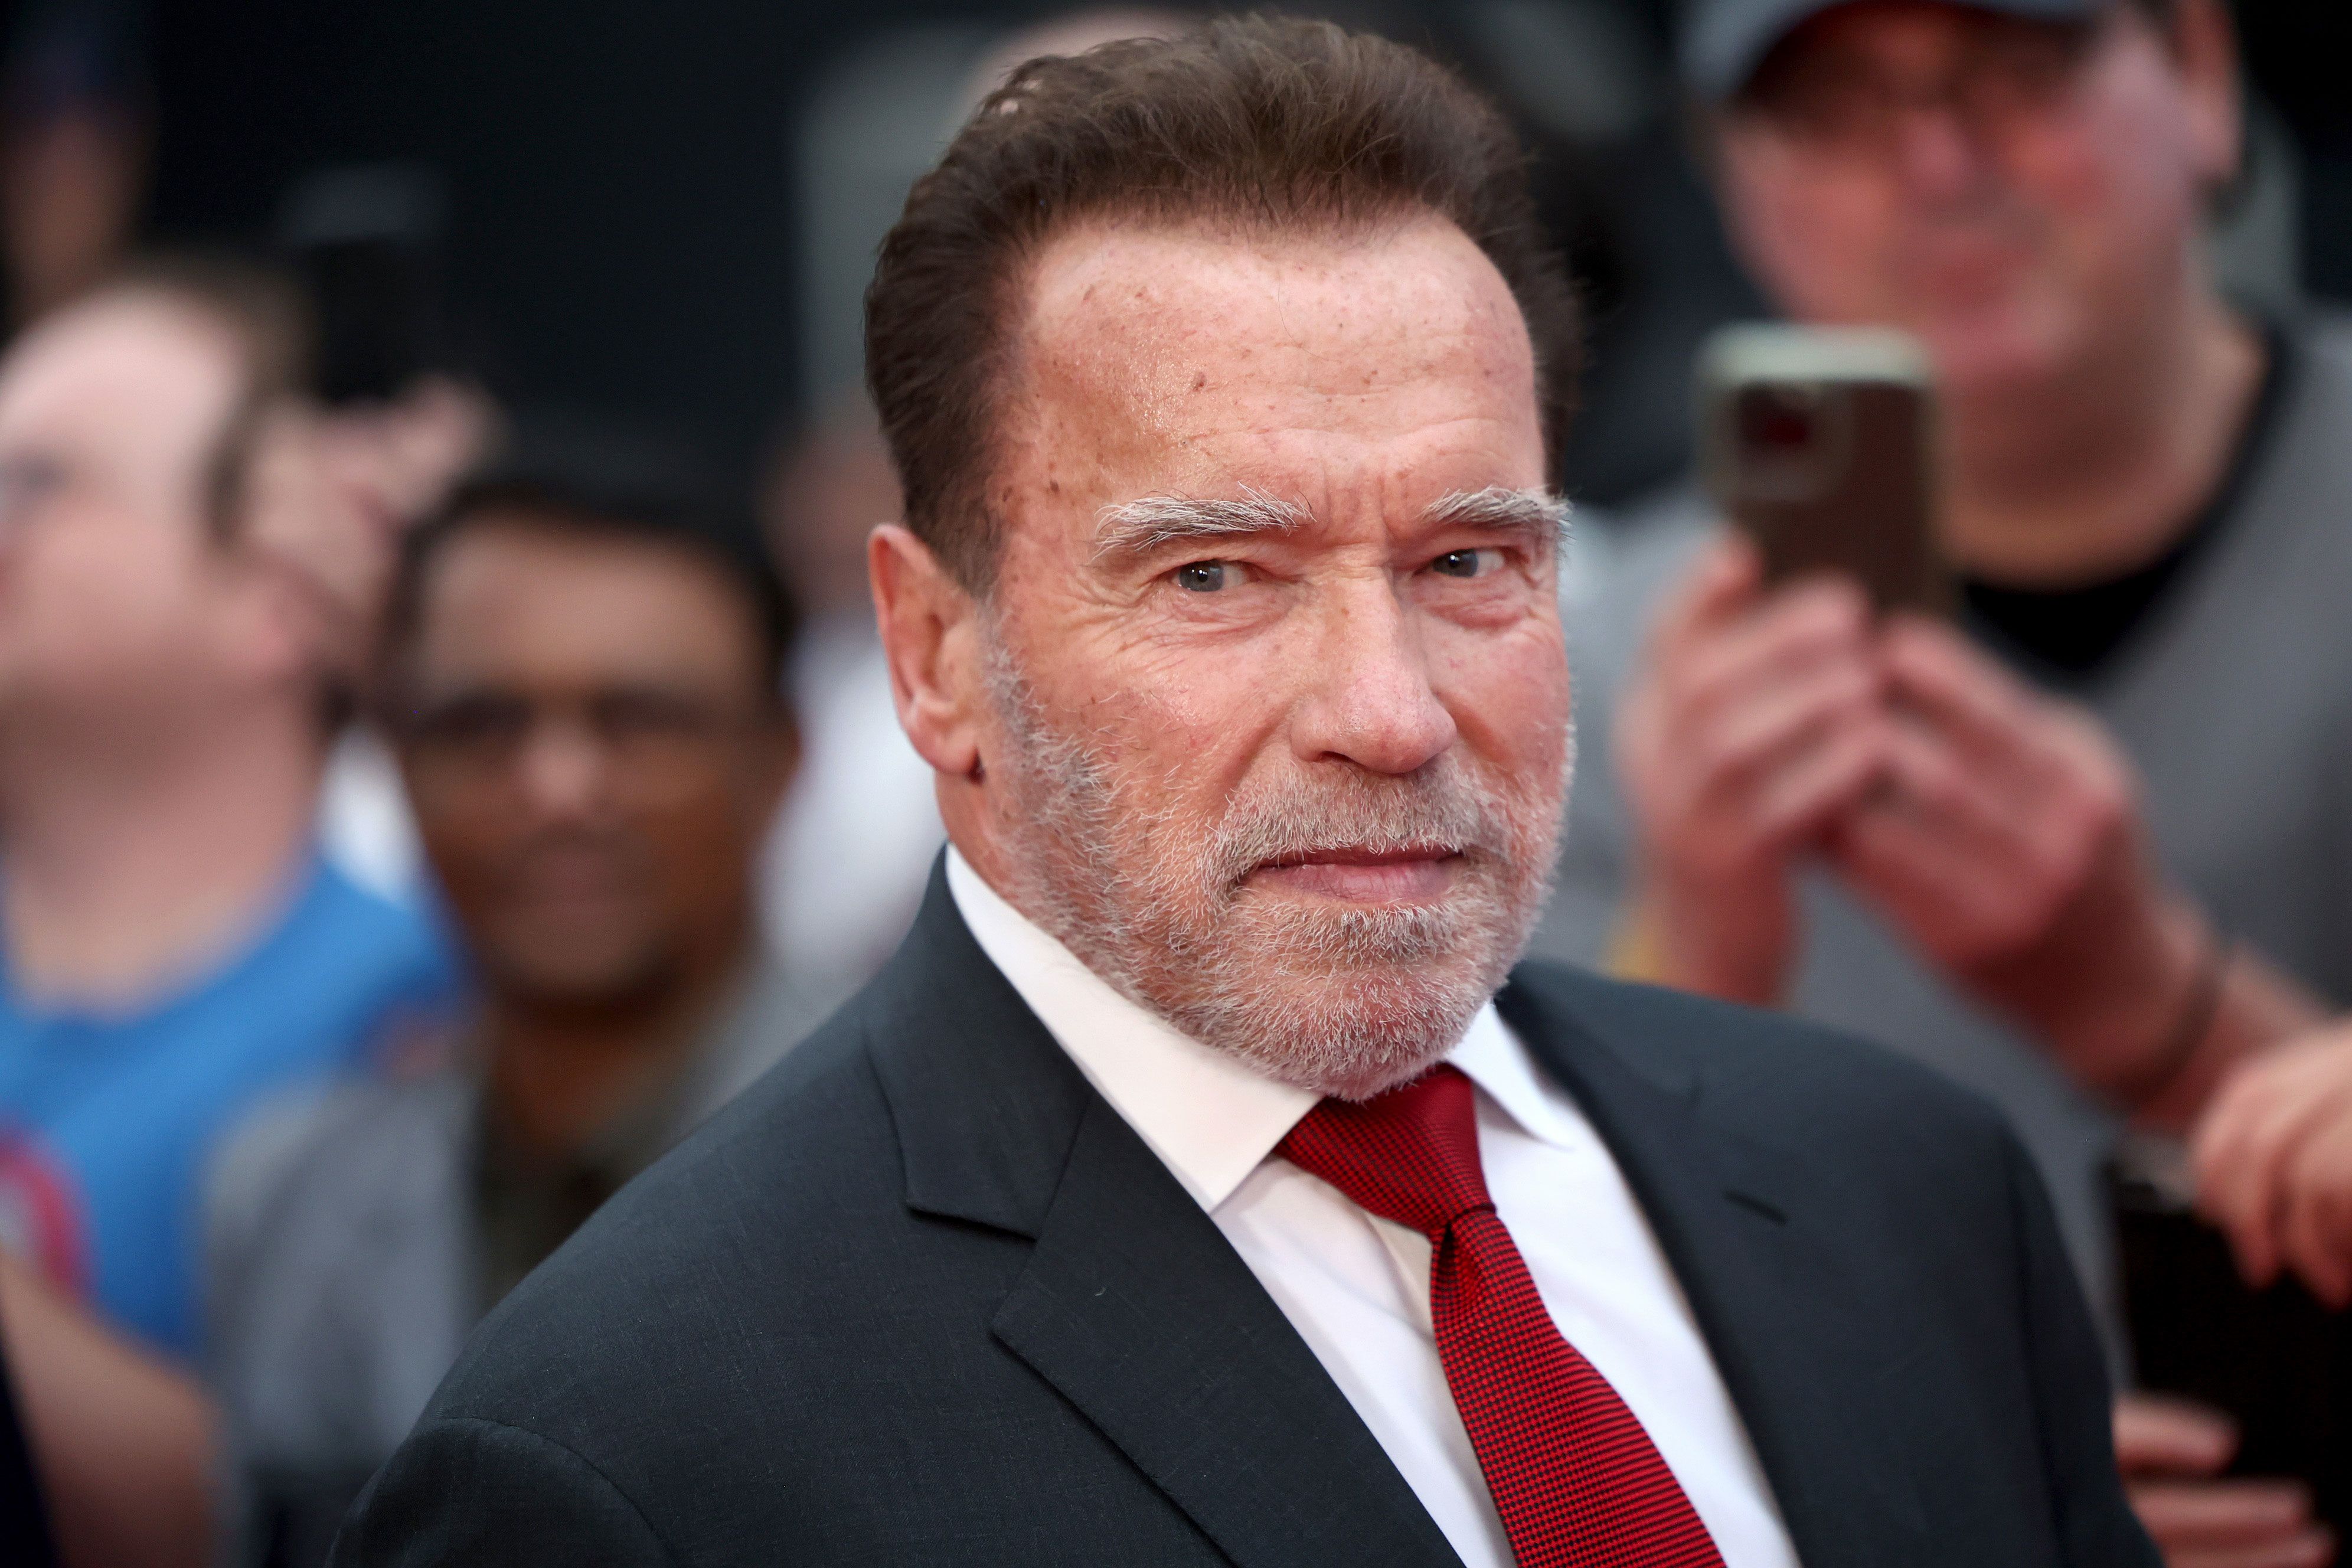 Arnold Schwarzenegger: Seeing How My Body Has Aged 'Sucks